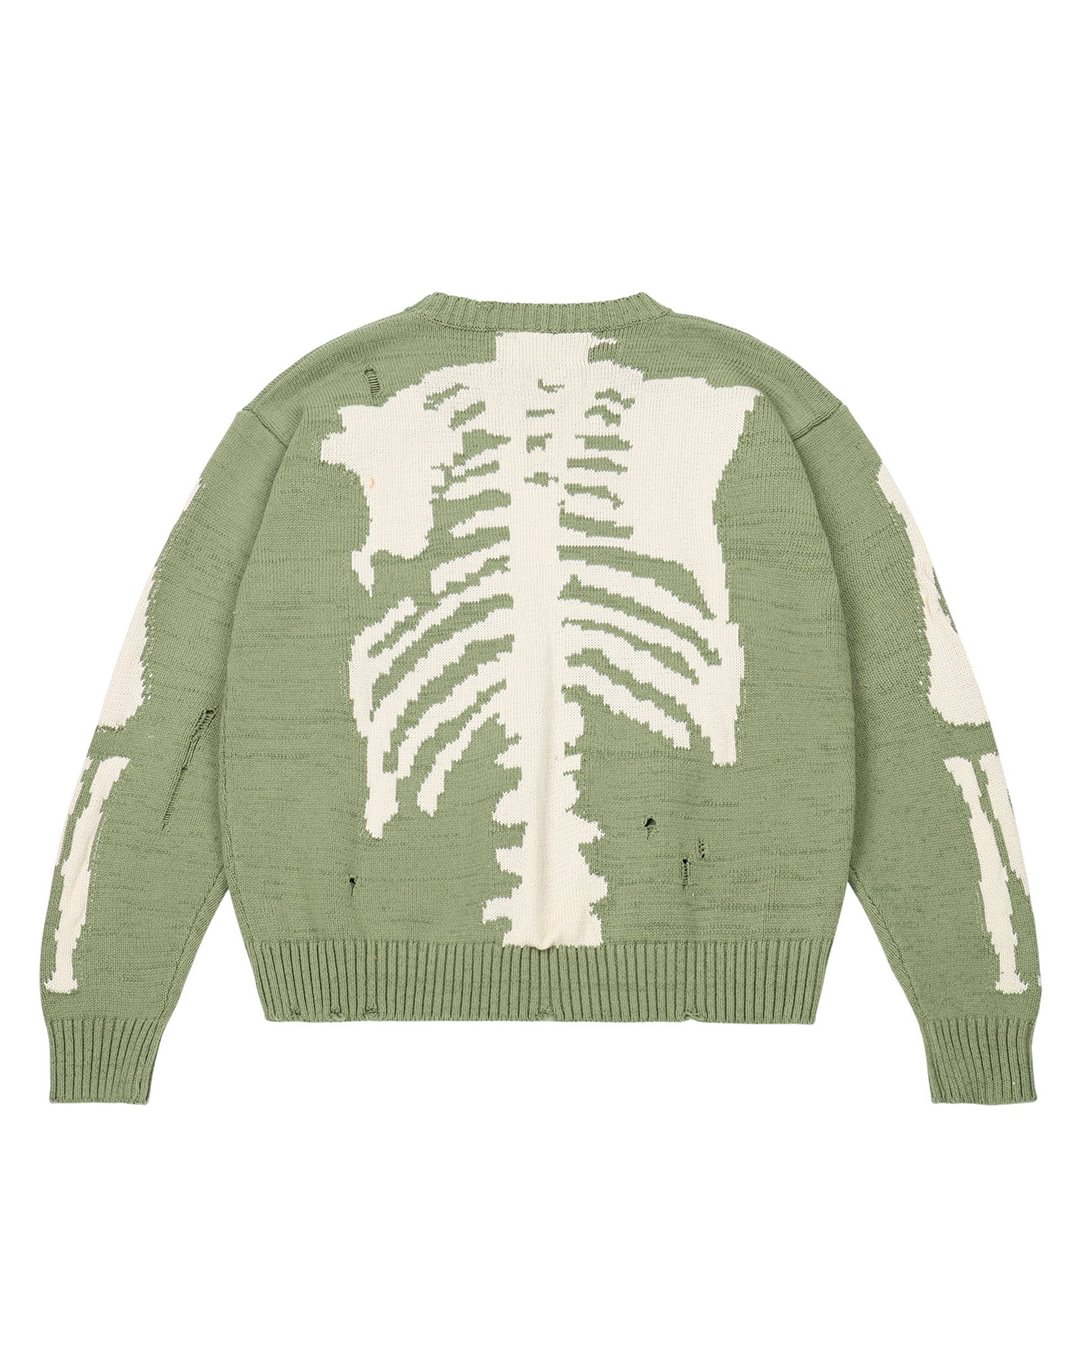 FashionV-FashionV Street Skull Jacquard Long Sleeve Sweater